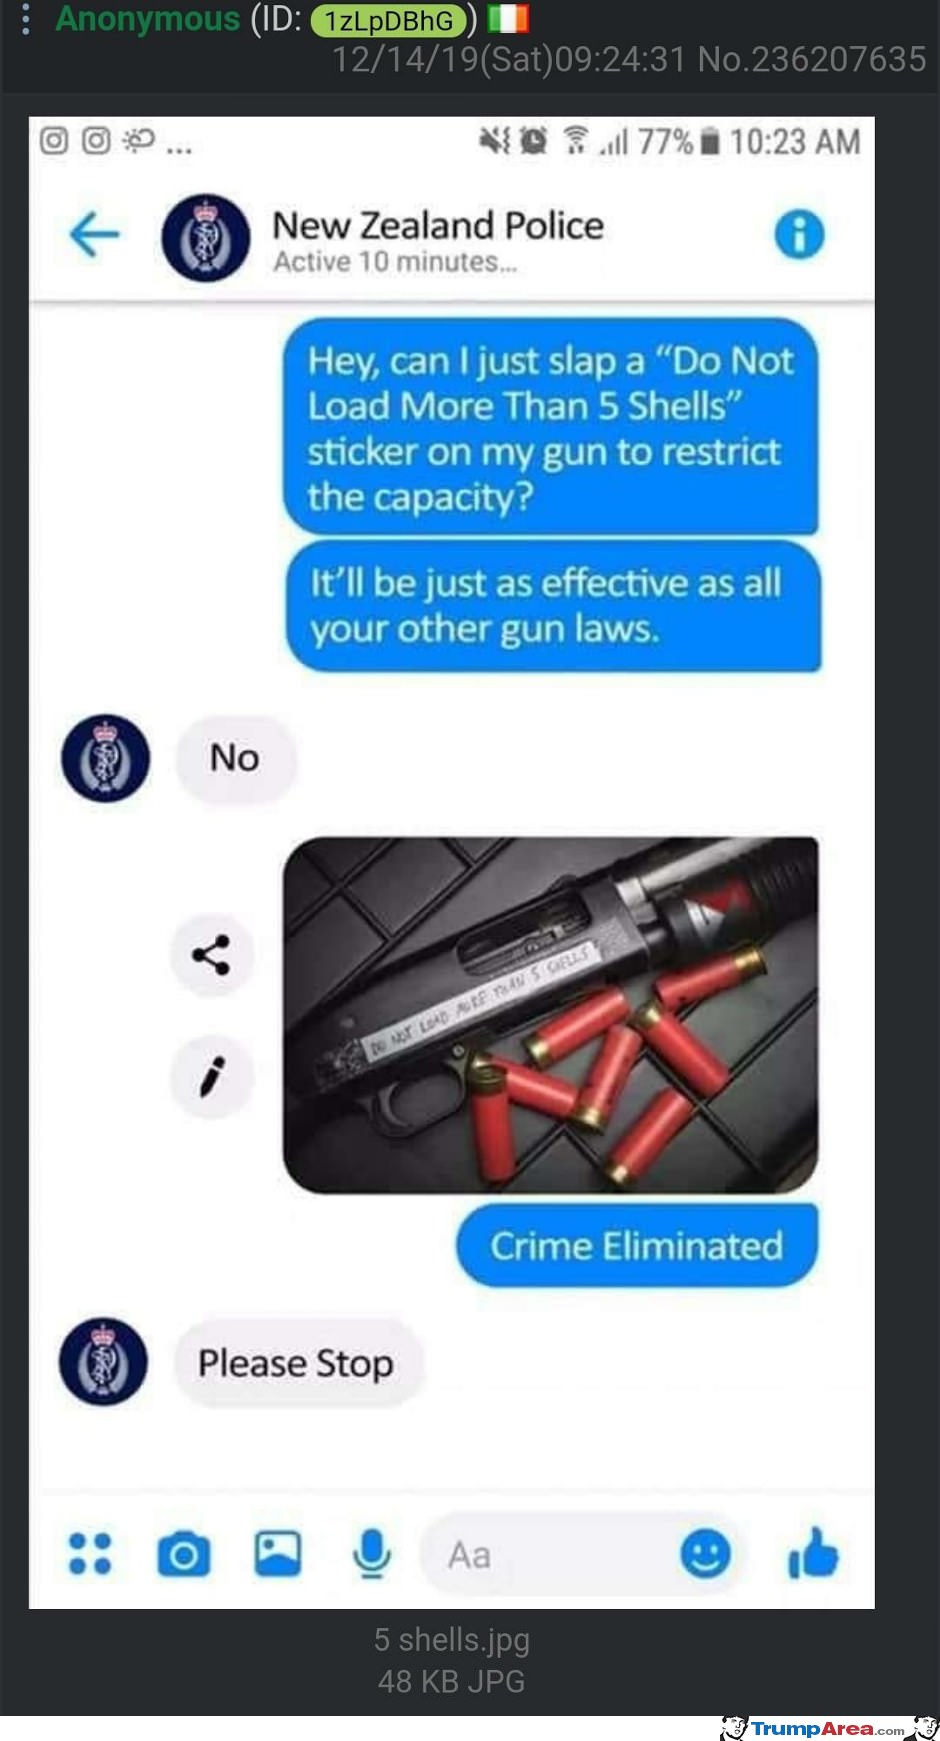 Crime Eliminated